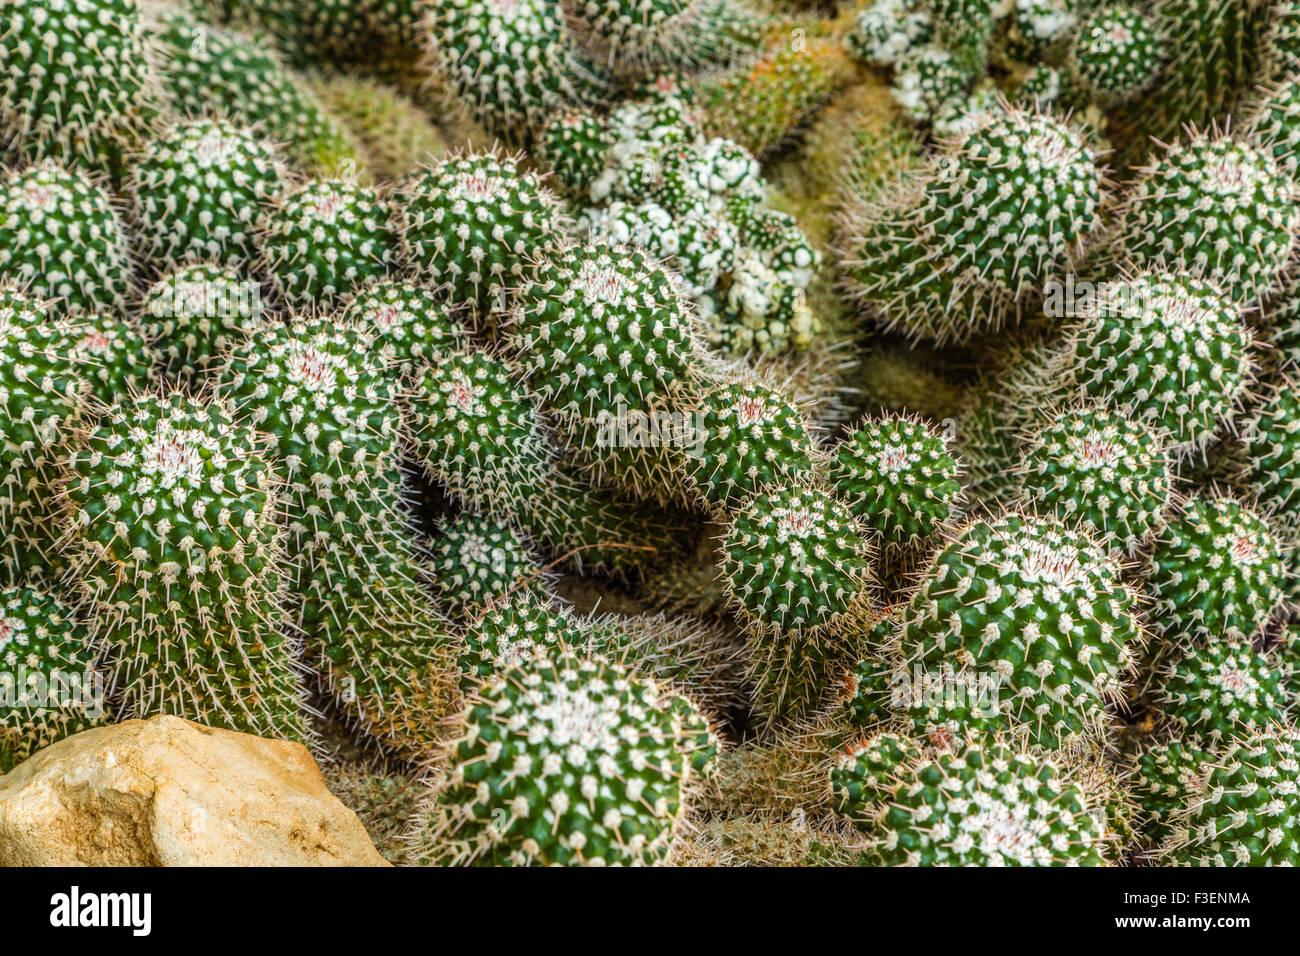 Verde cactus succulente con contorti e vermicular pale e un sacco di aghi Foto Stock